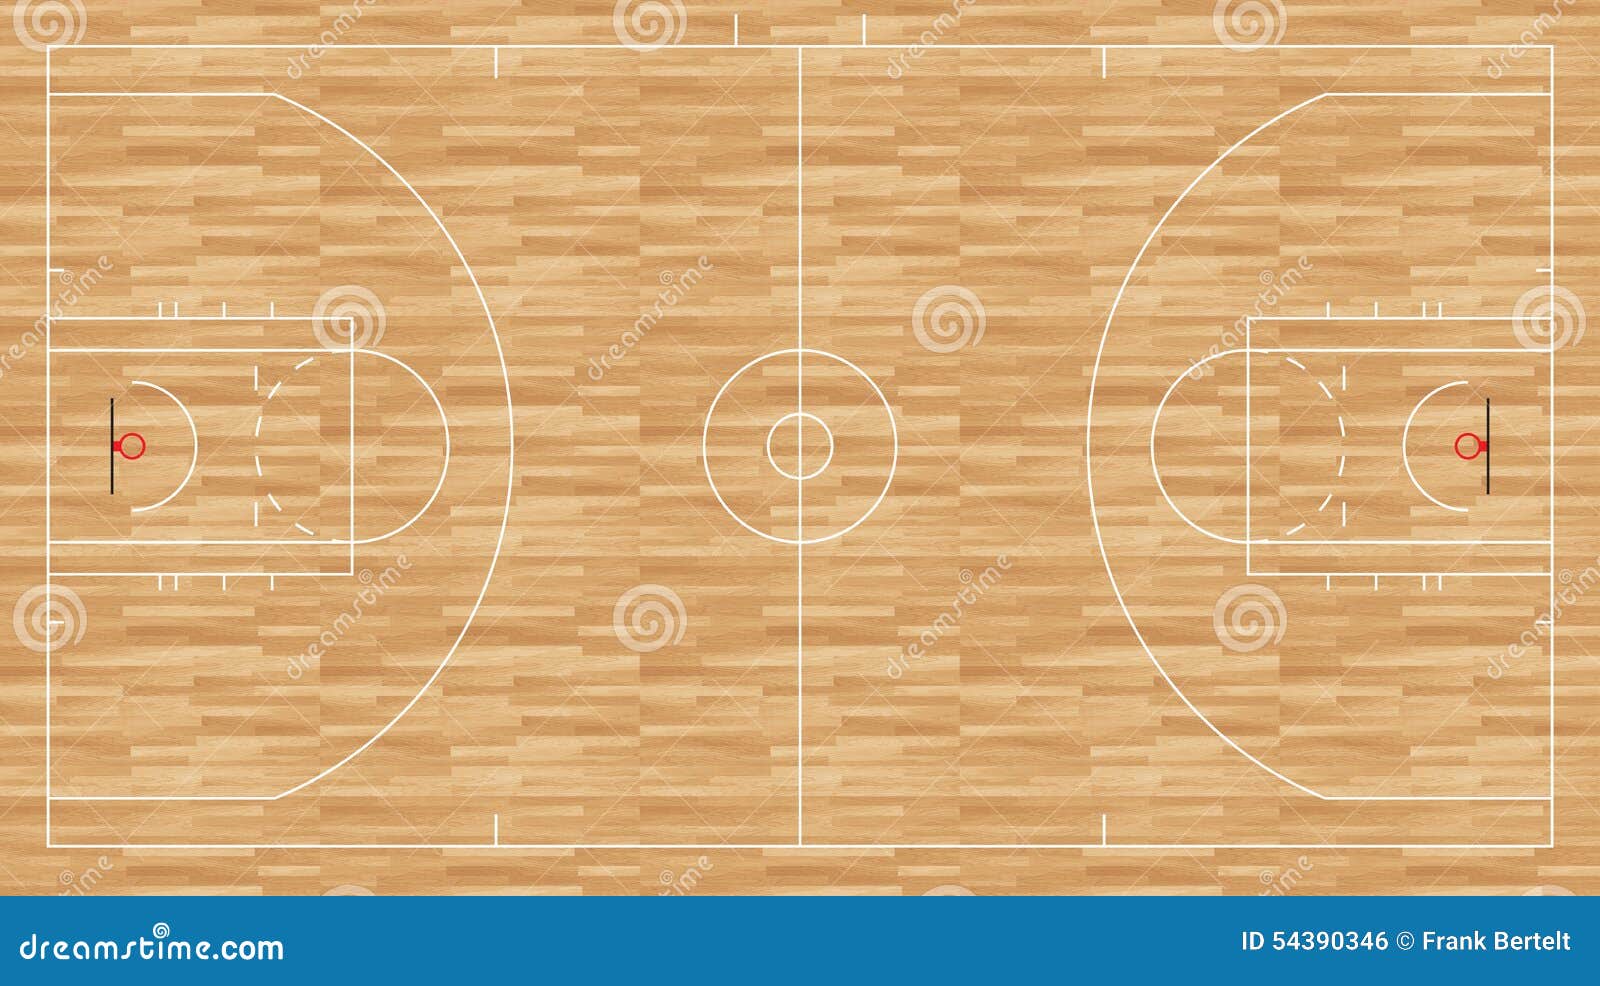 Basketball Floor - Regulation Nba Stock Illustration